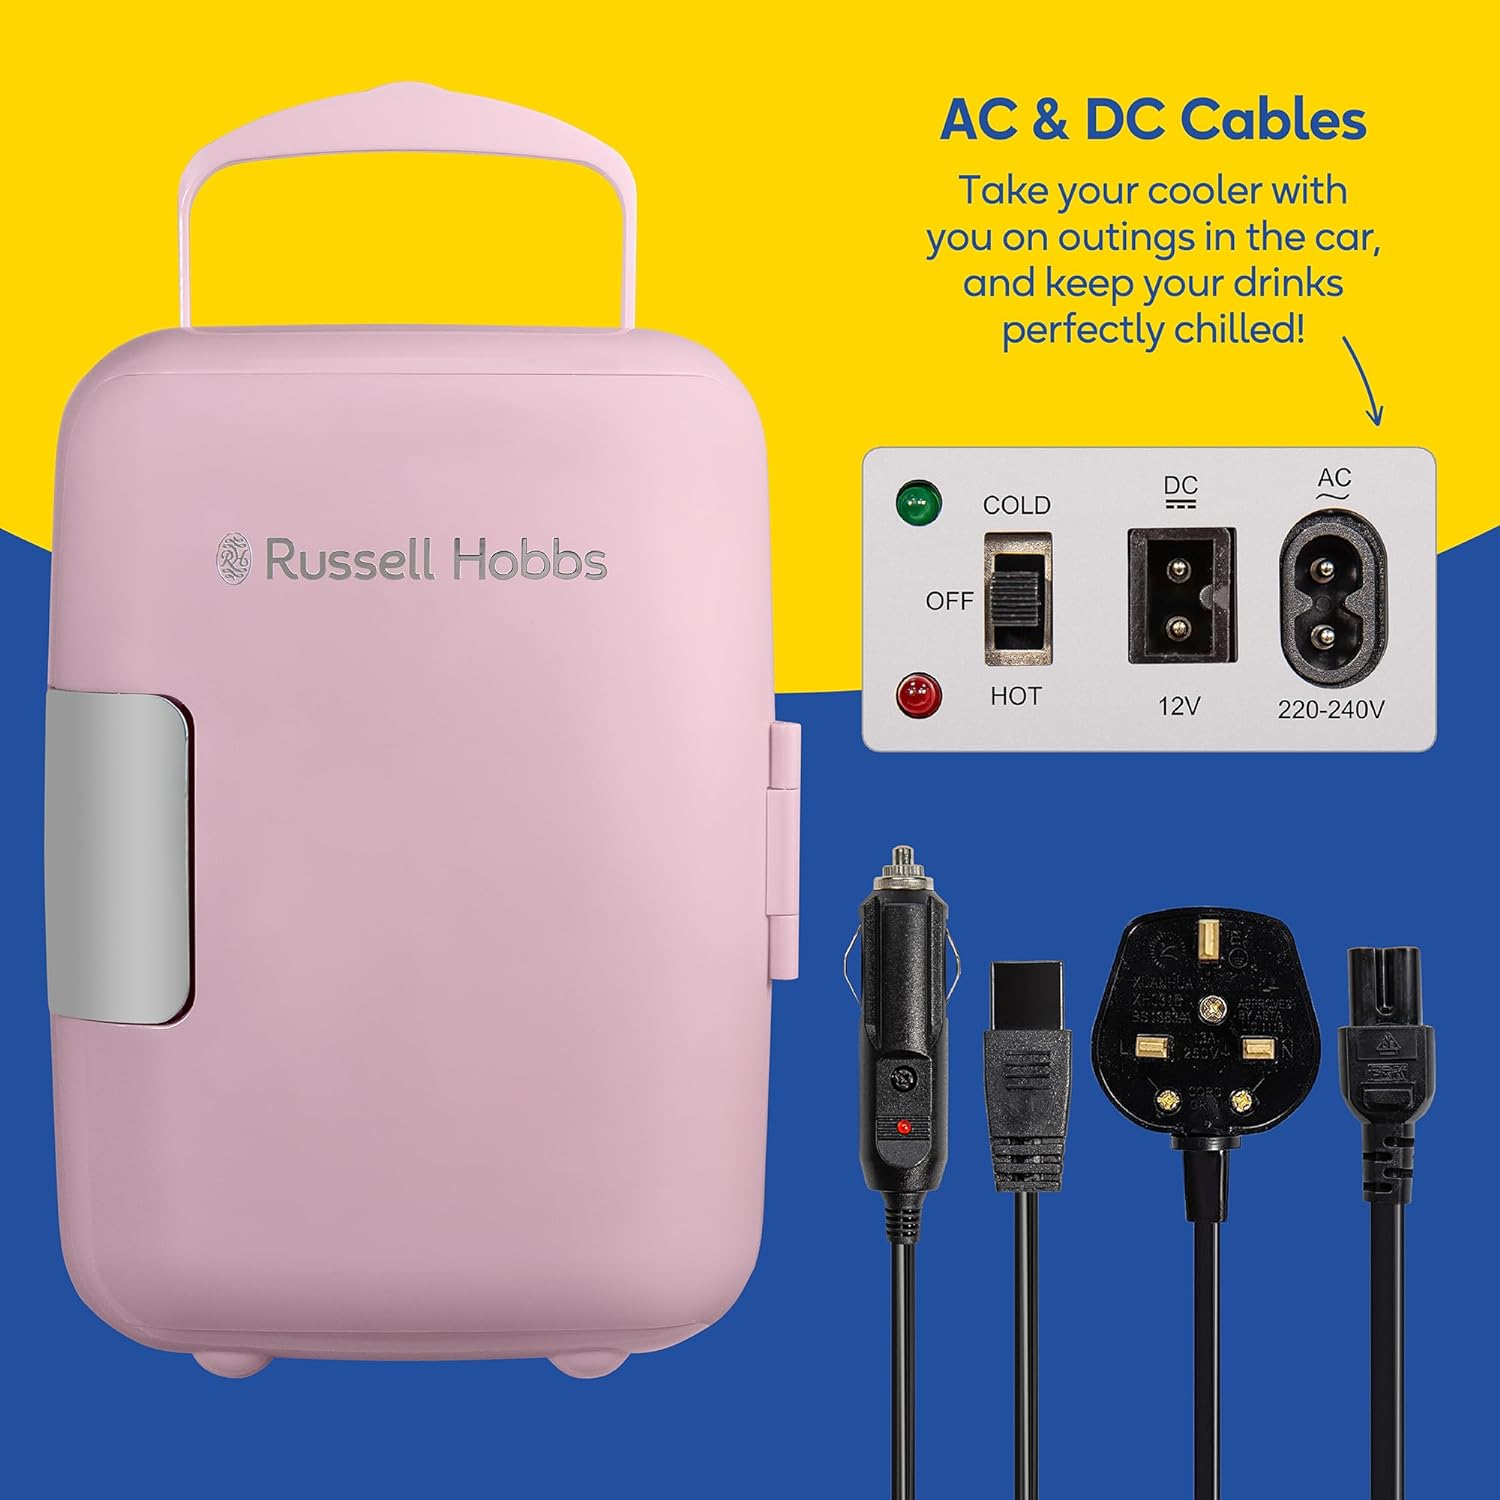 Russell Hobbs 4L Portable Mini Cooler & Warmer Pink | RH4CLR1001P